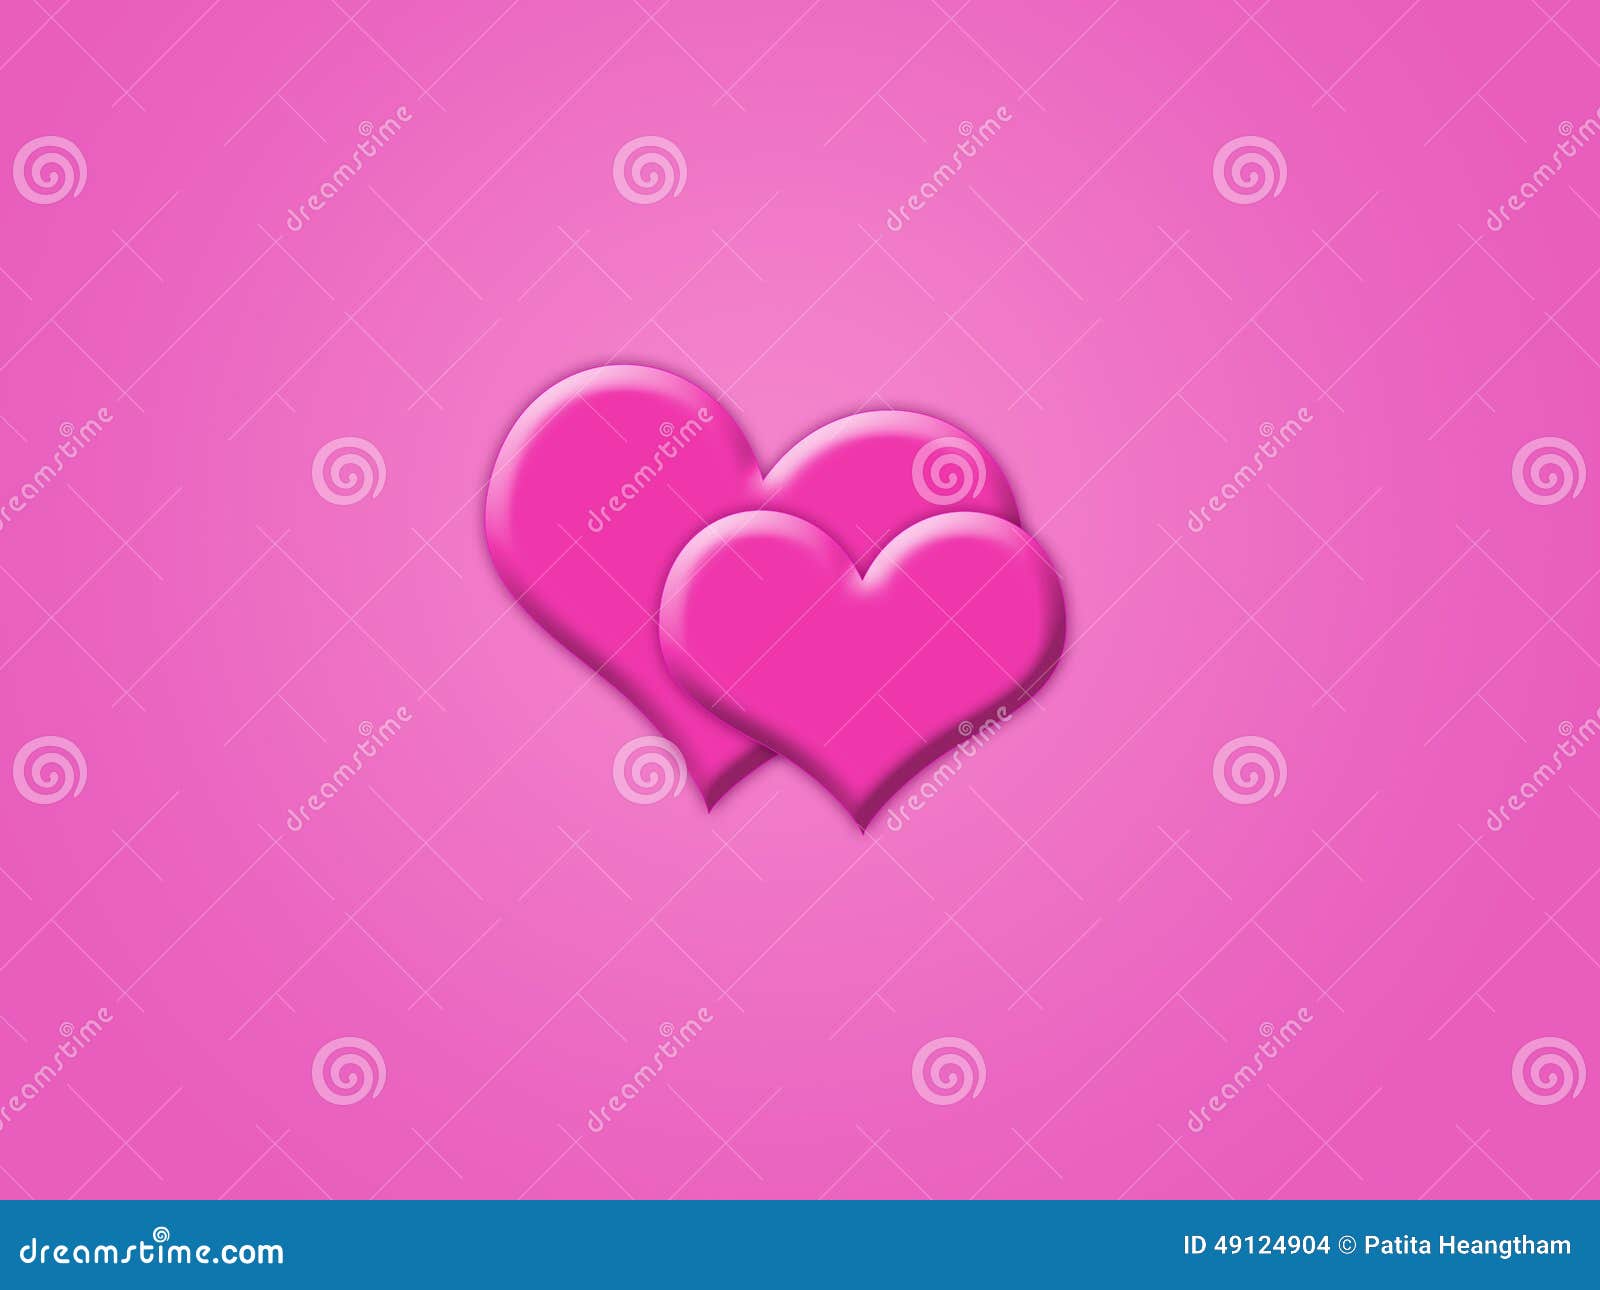 Heart background stock illustration. Illustration of backdrop - 49124904